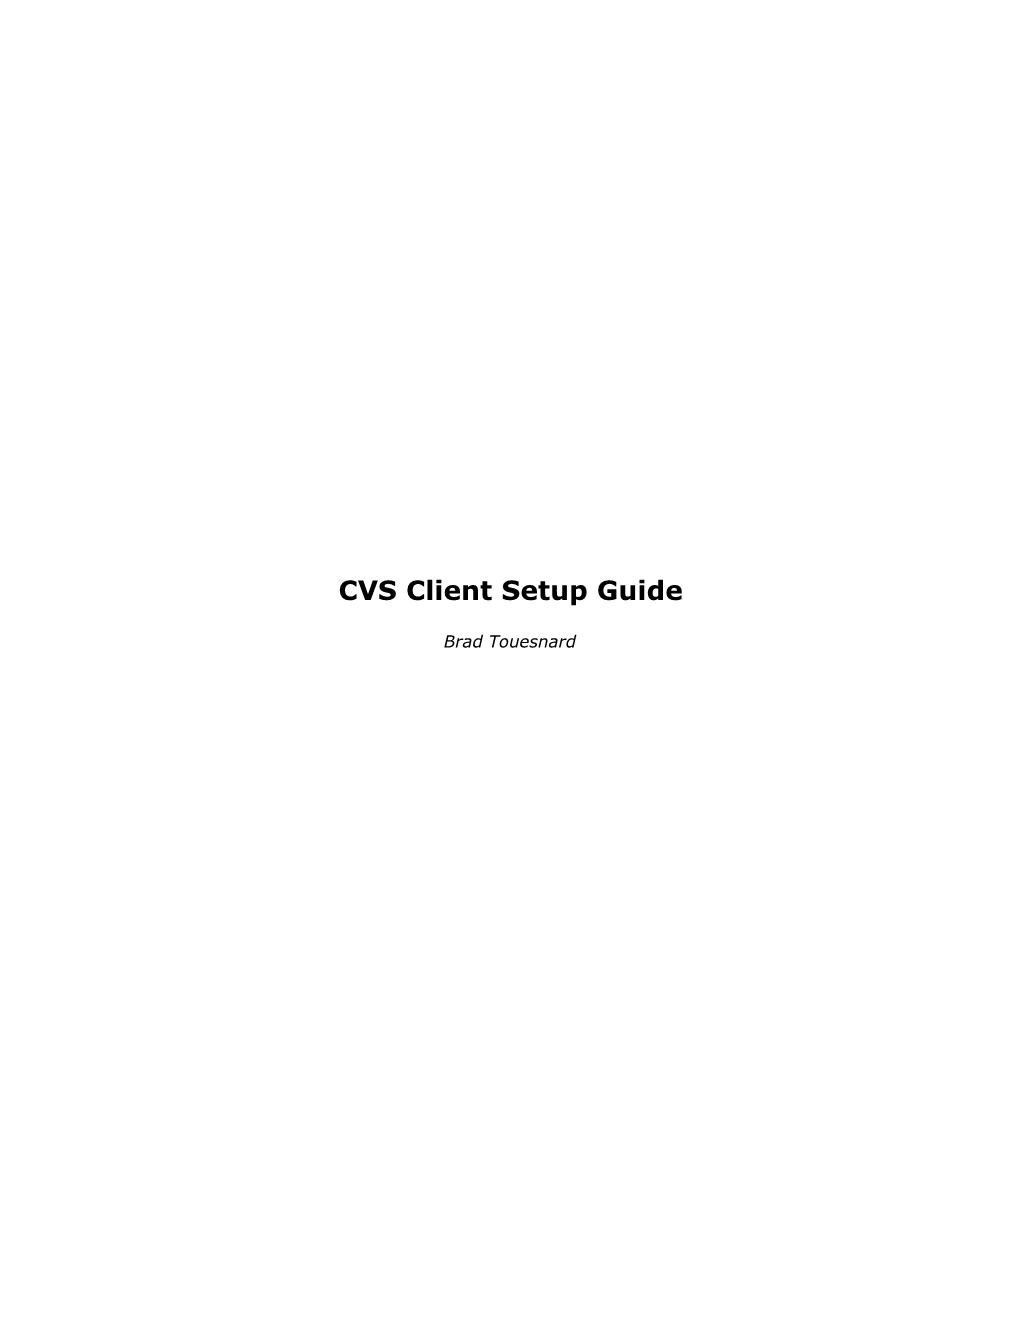 CVS Client Setup Guide